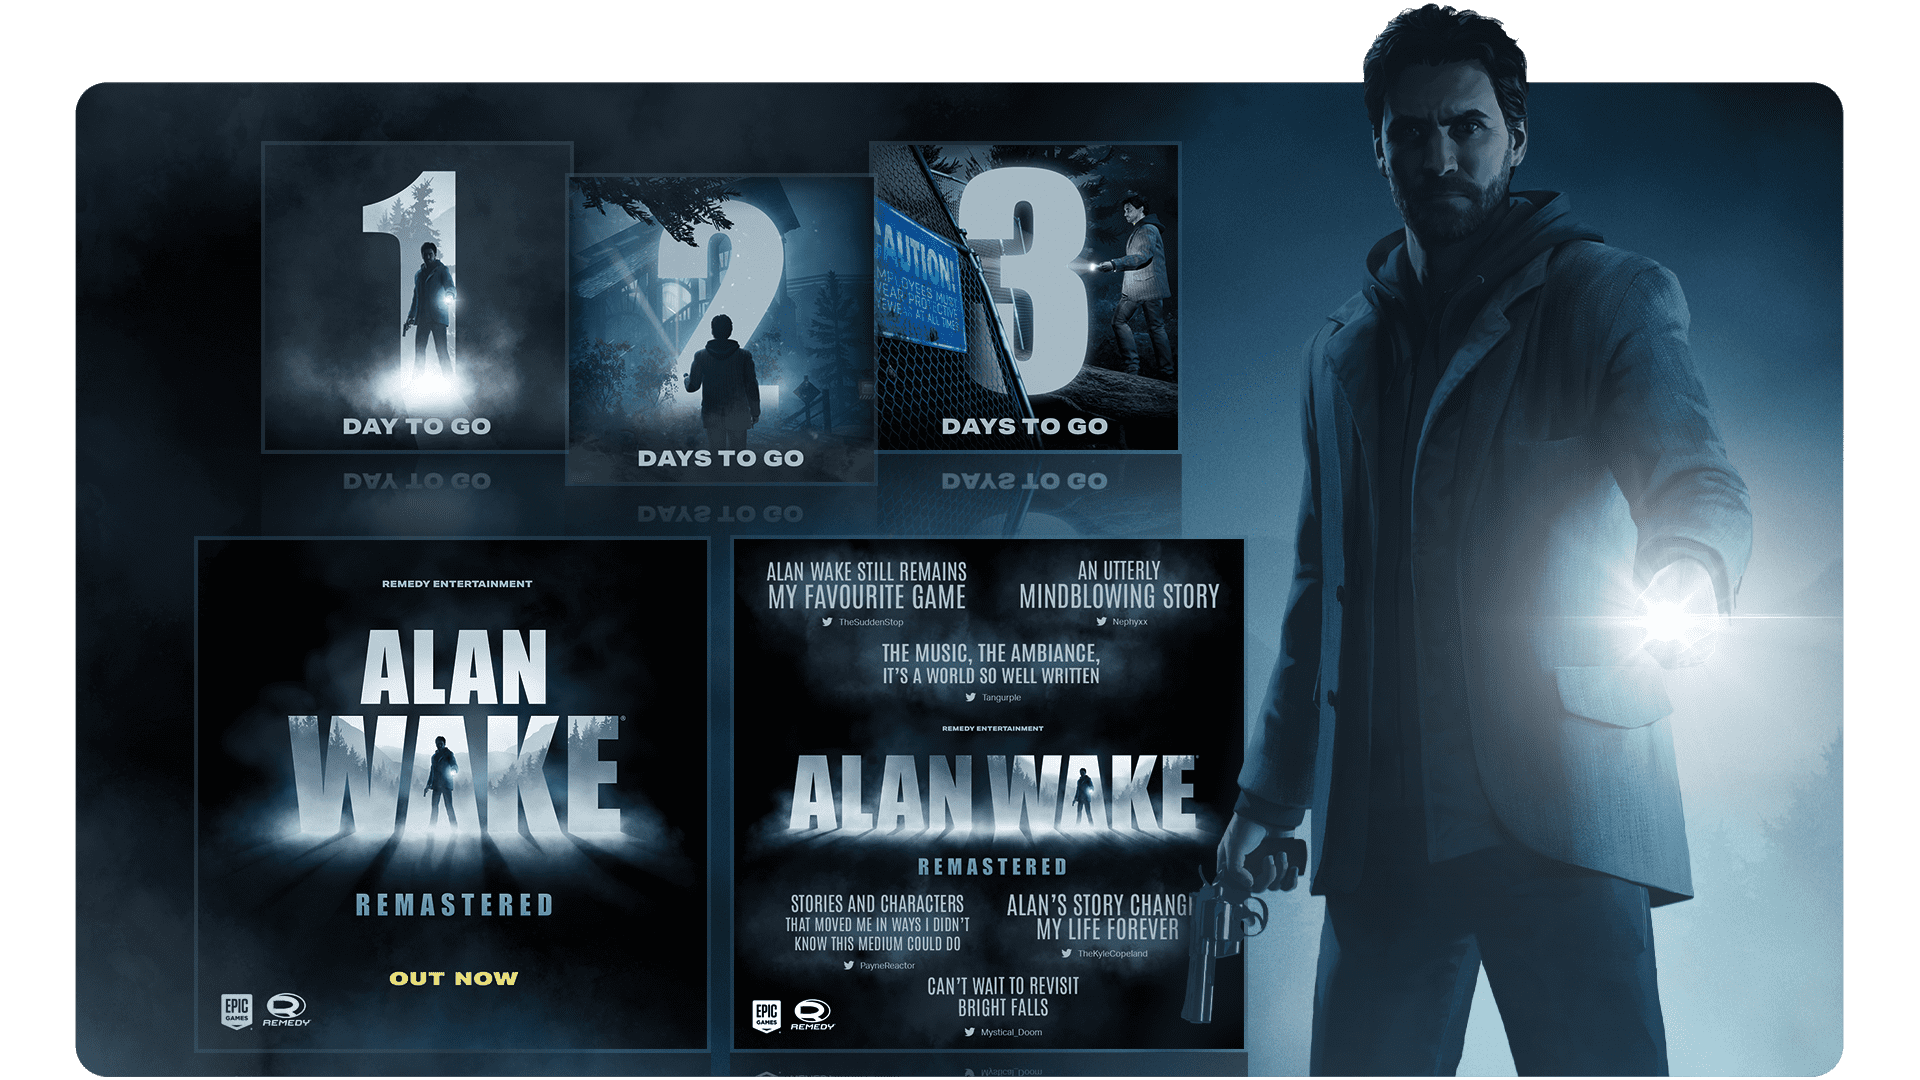 Alan Wake Remastered -- Is it worth it?